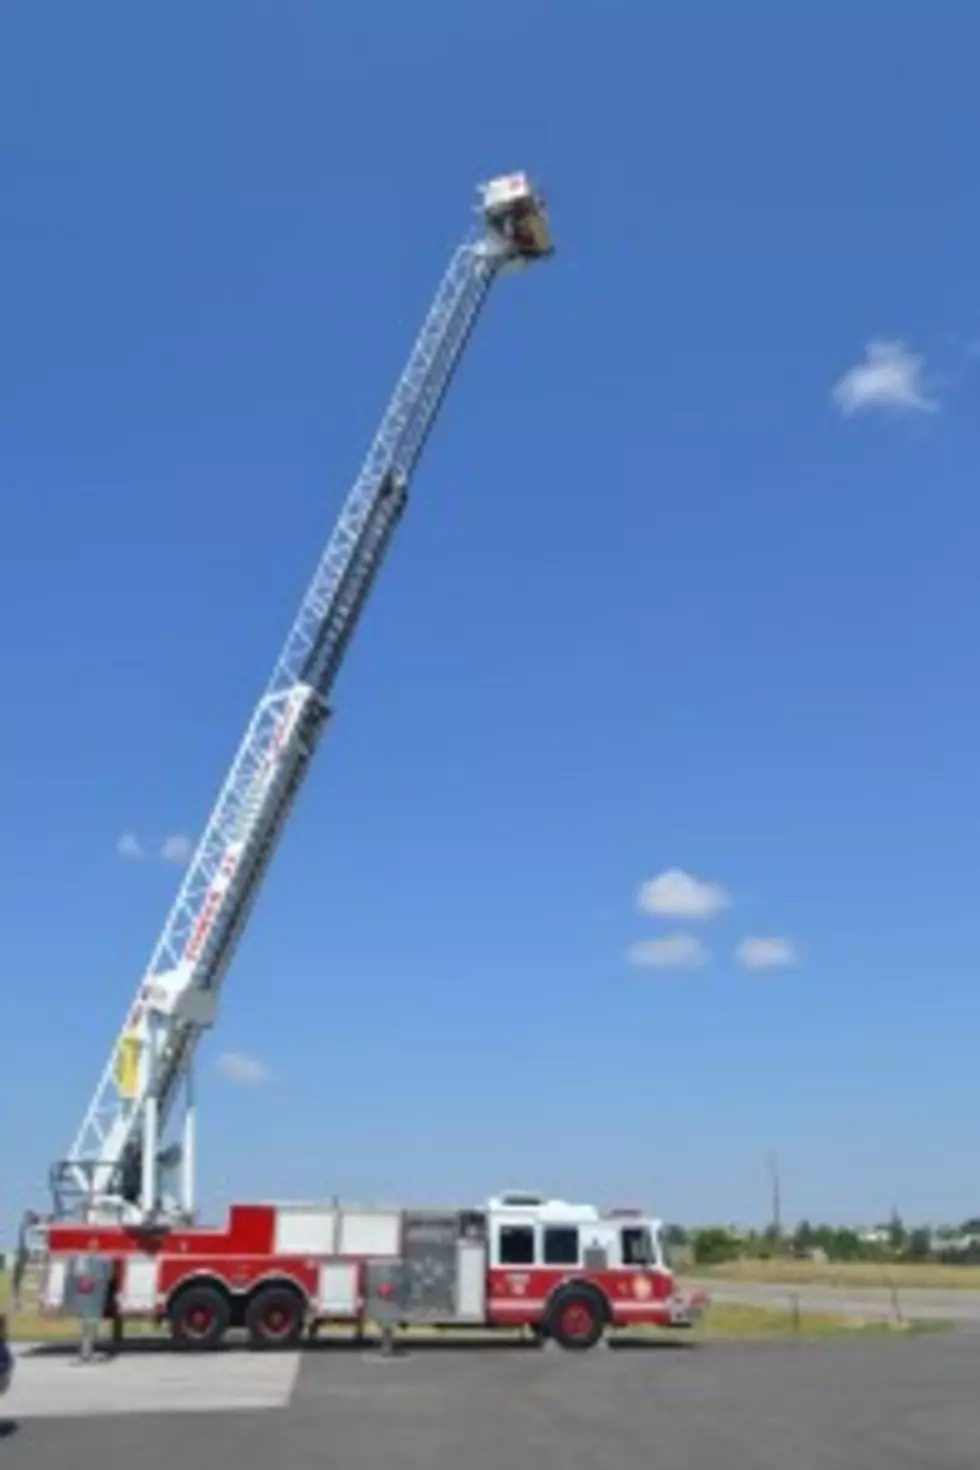 Fire District 2 Begins Training on Ladder Truck